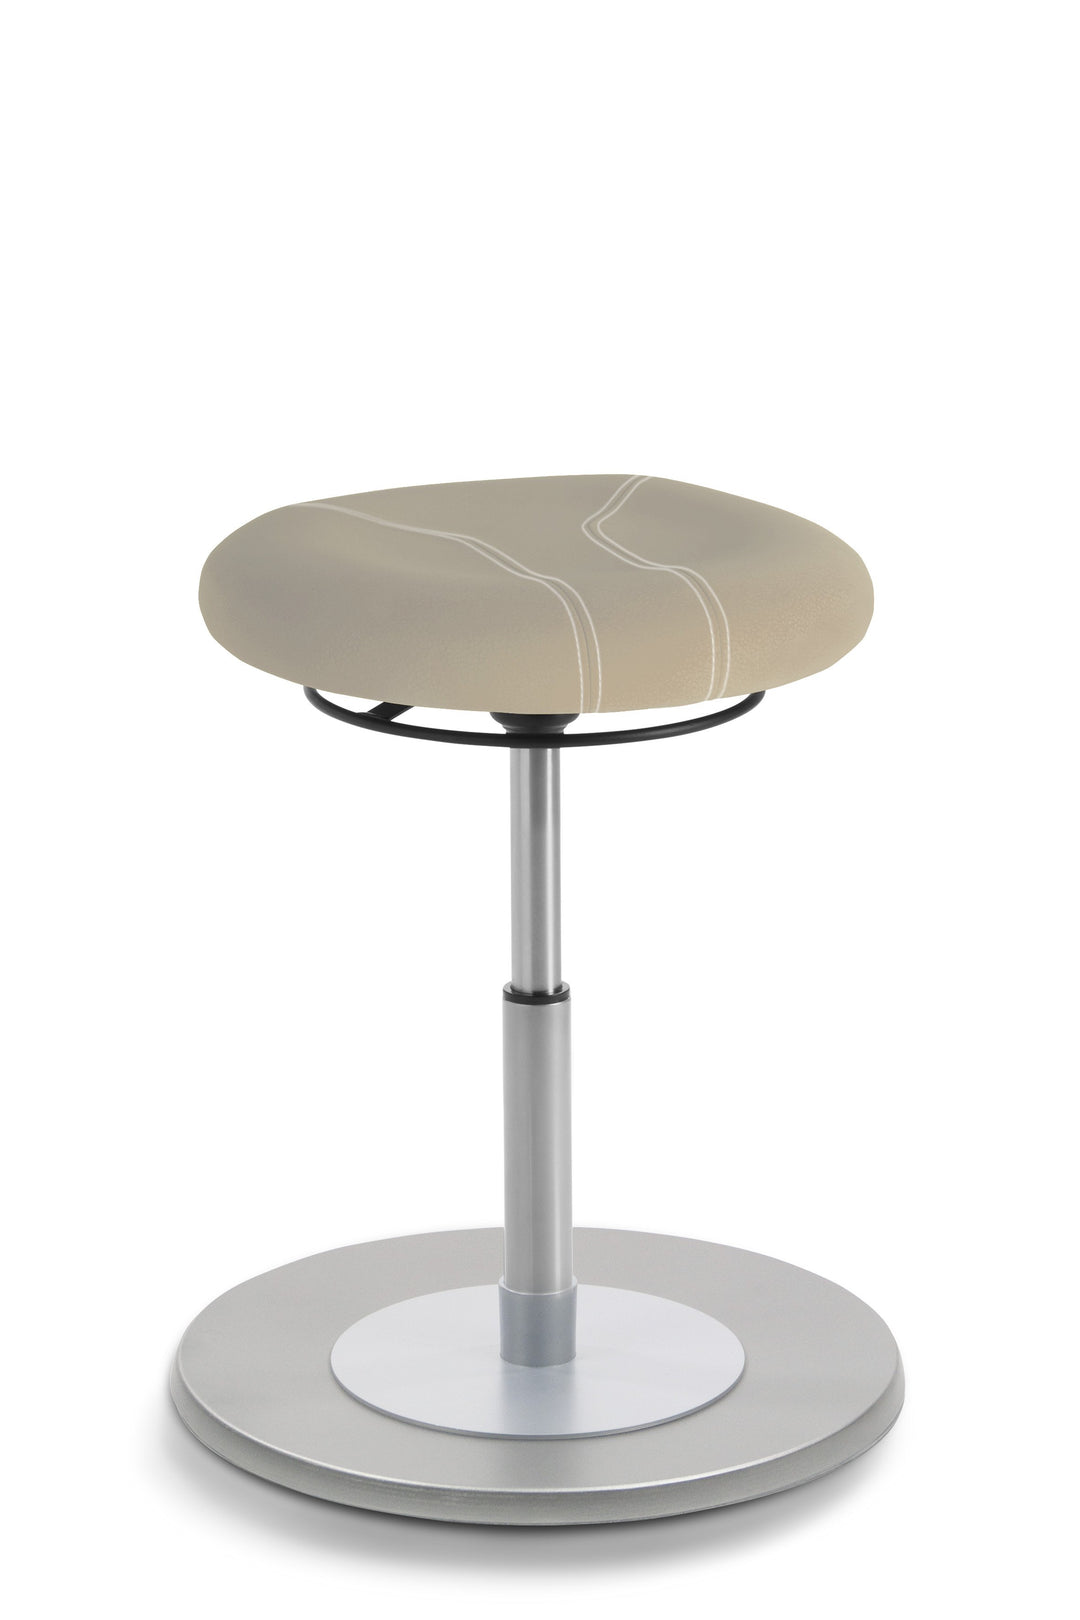 Mayer MyErgosit Taboret Krzesło Stołek balansujący płaski 37-50cm podstawa srebrna 1111 EF